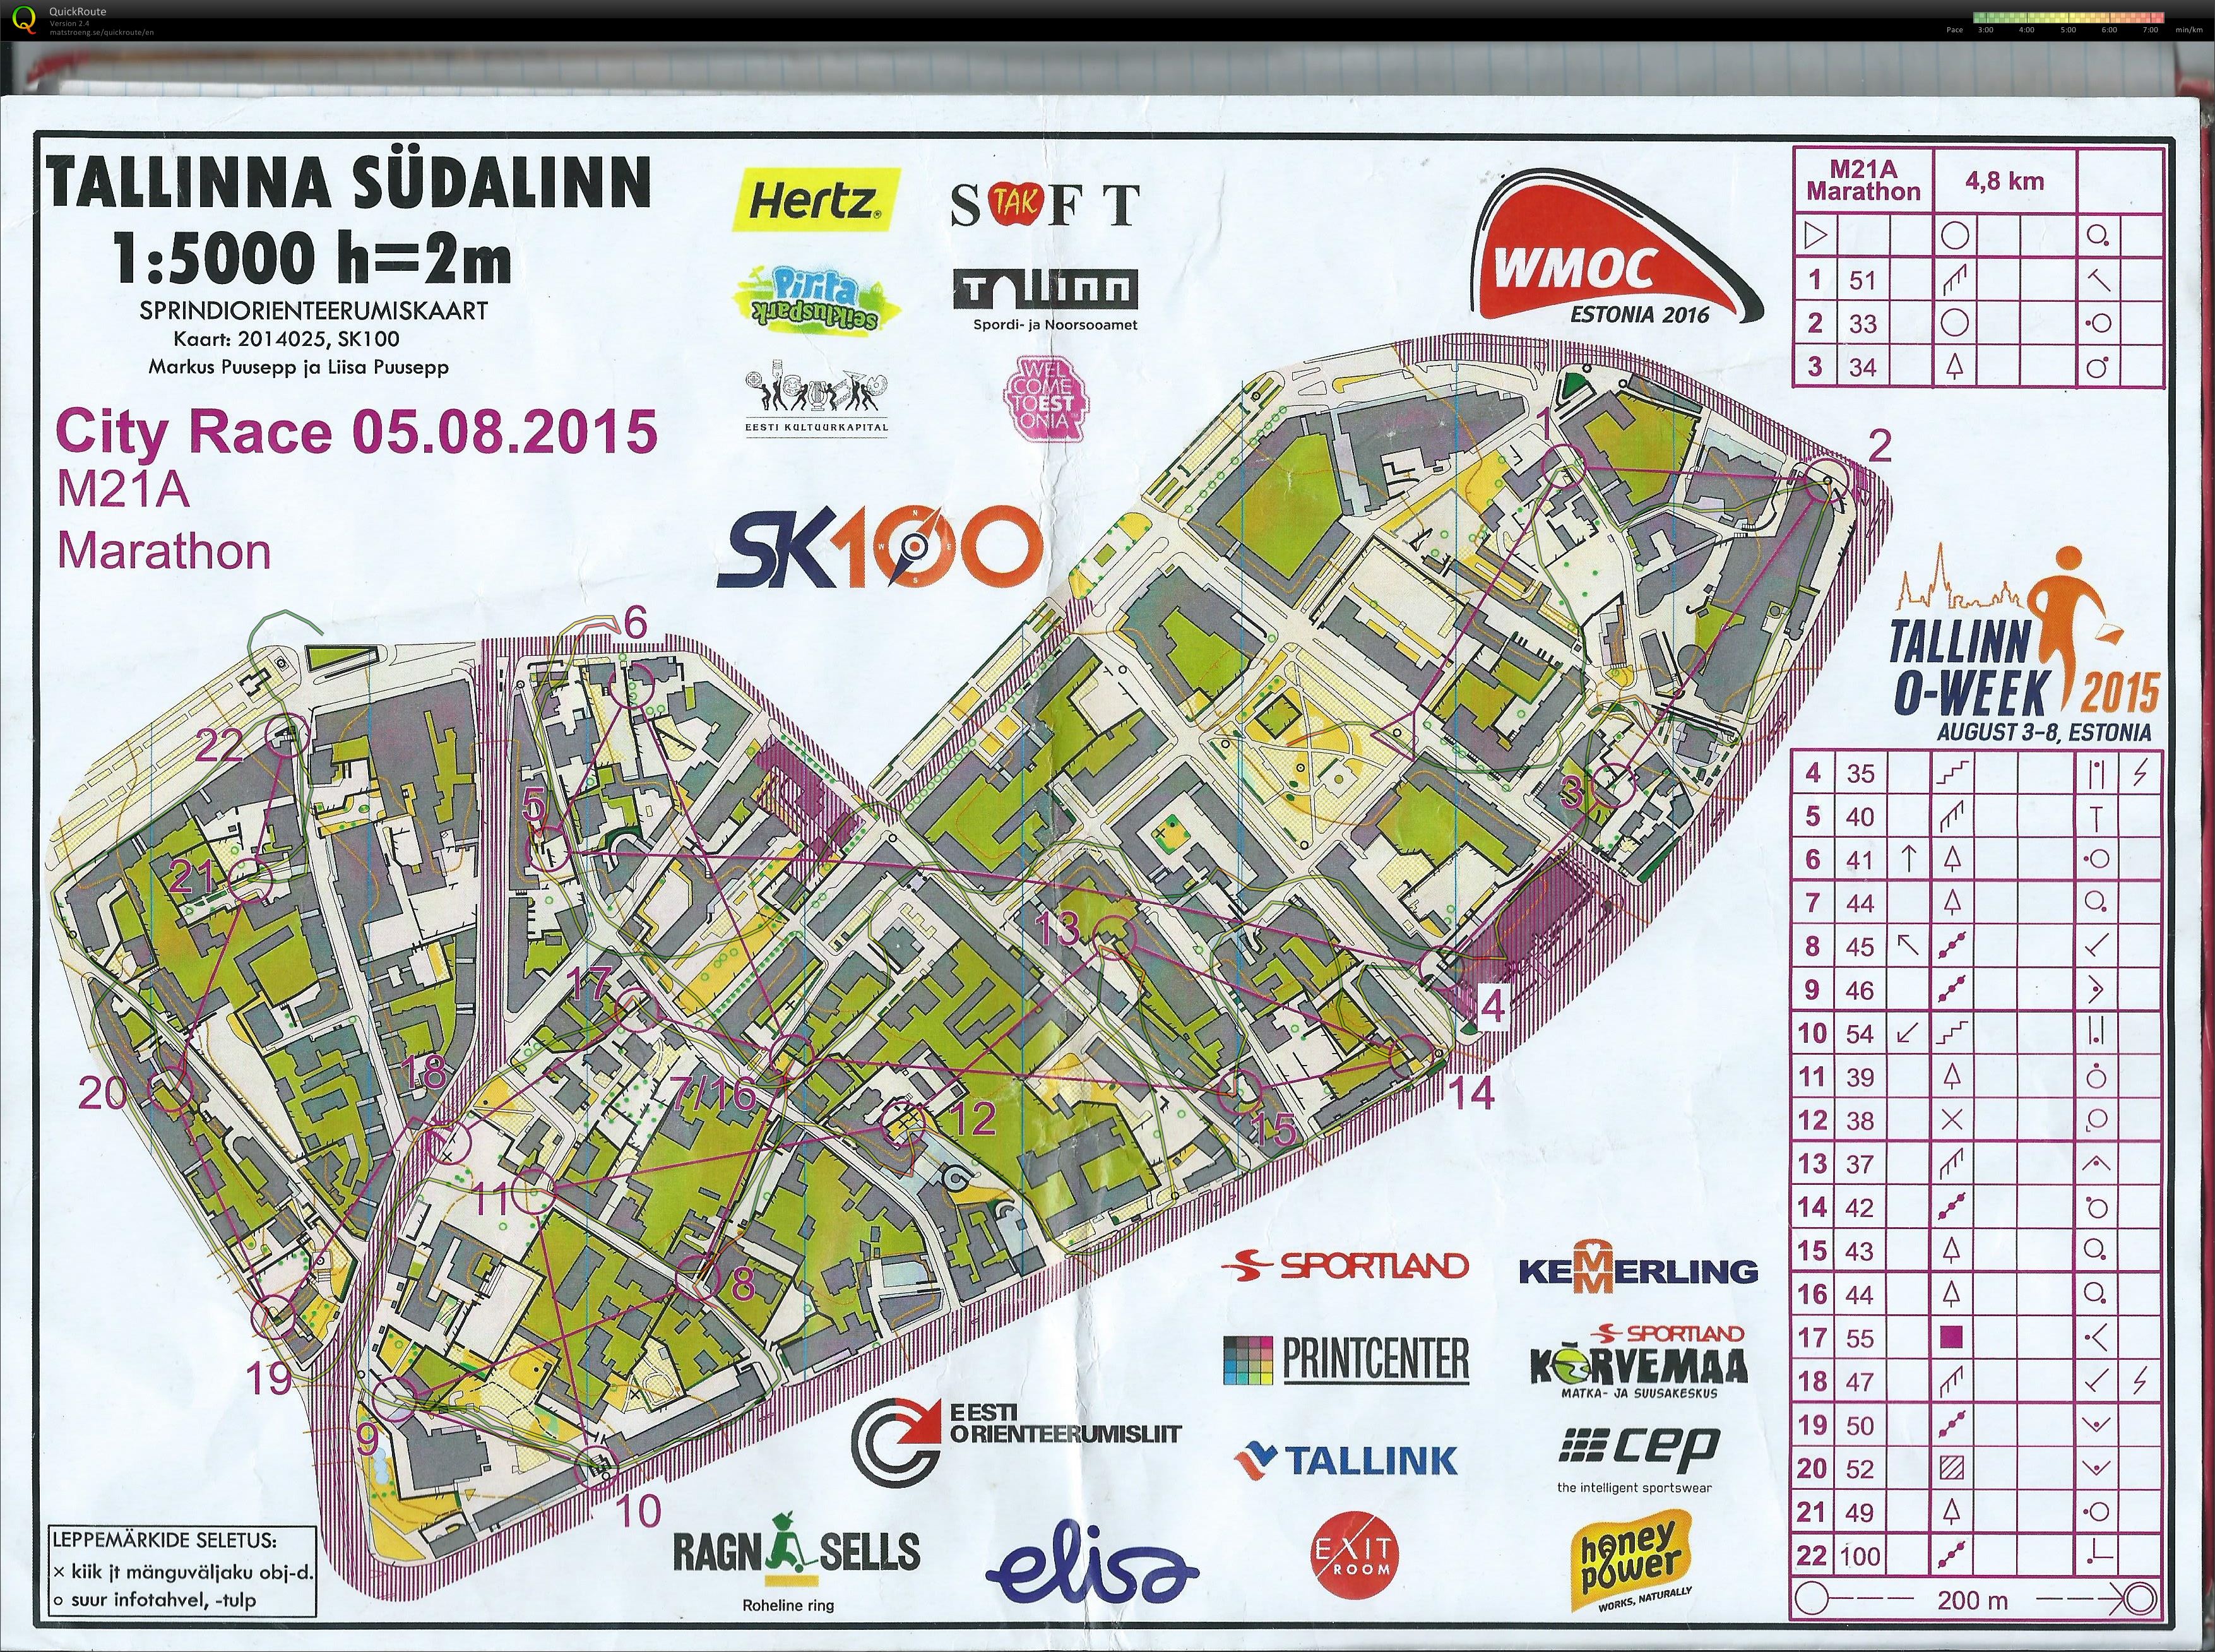 Z378 - Tallinn O-Week - E3 - City Race (05.08.2015)